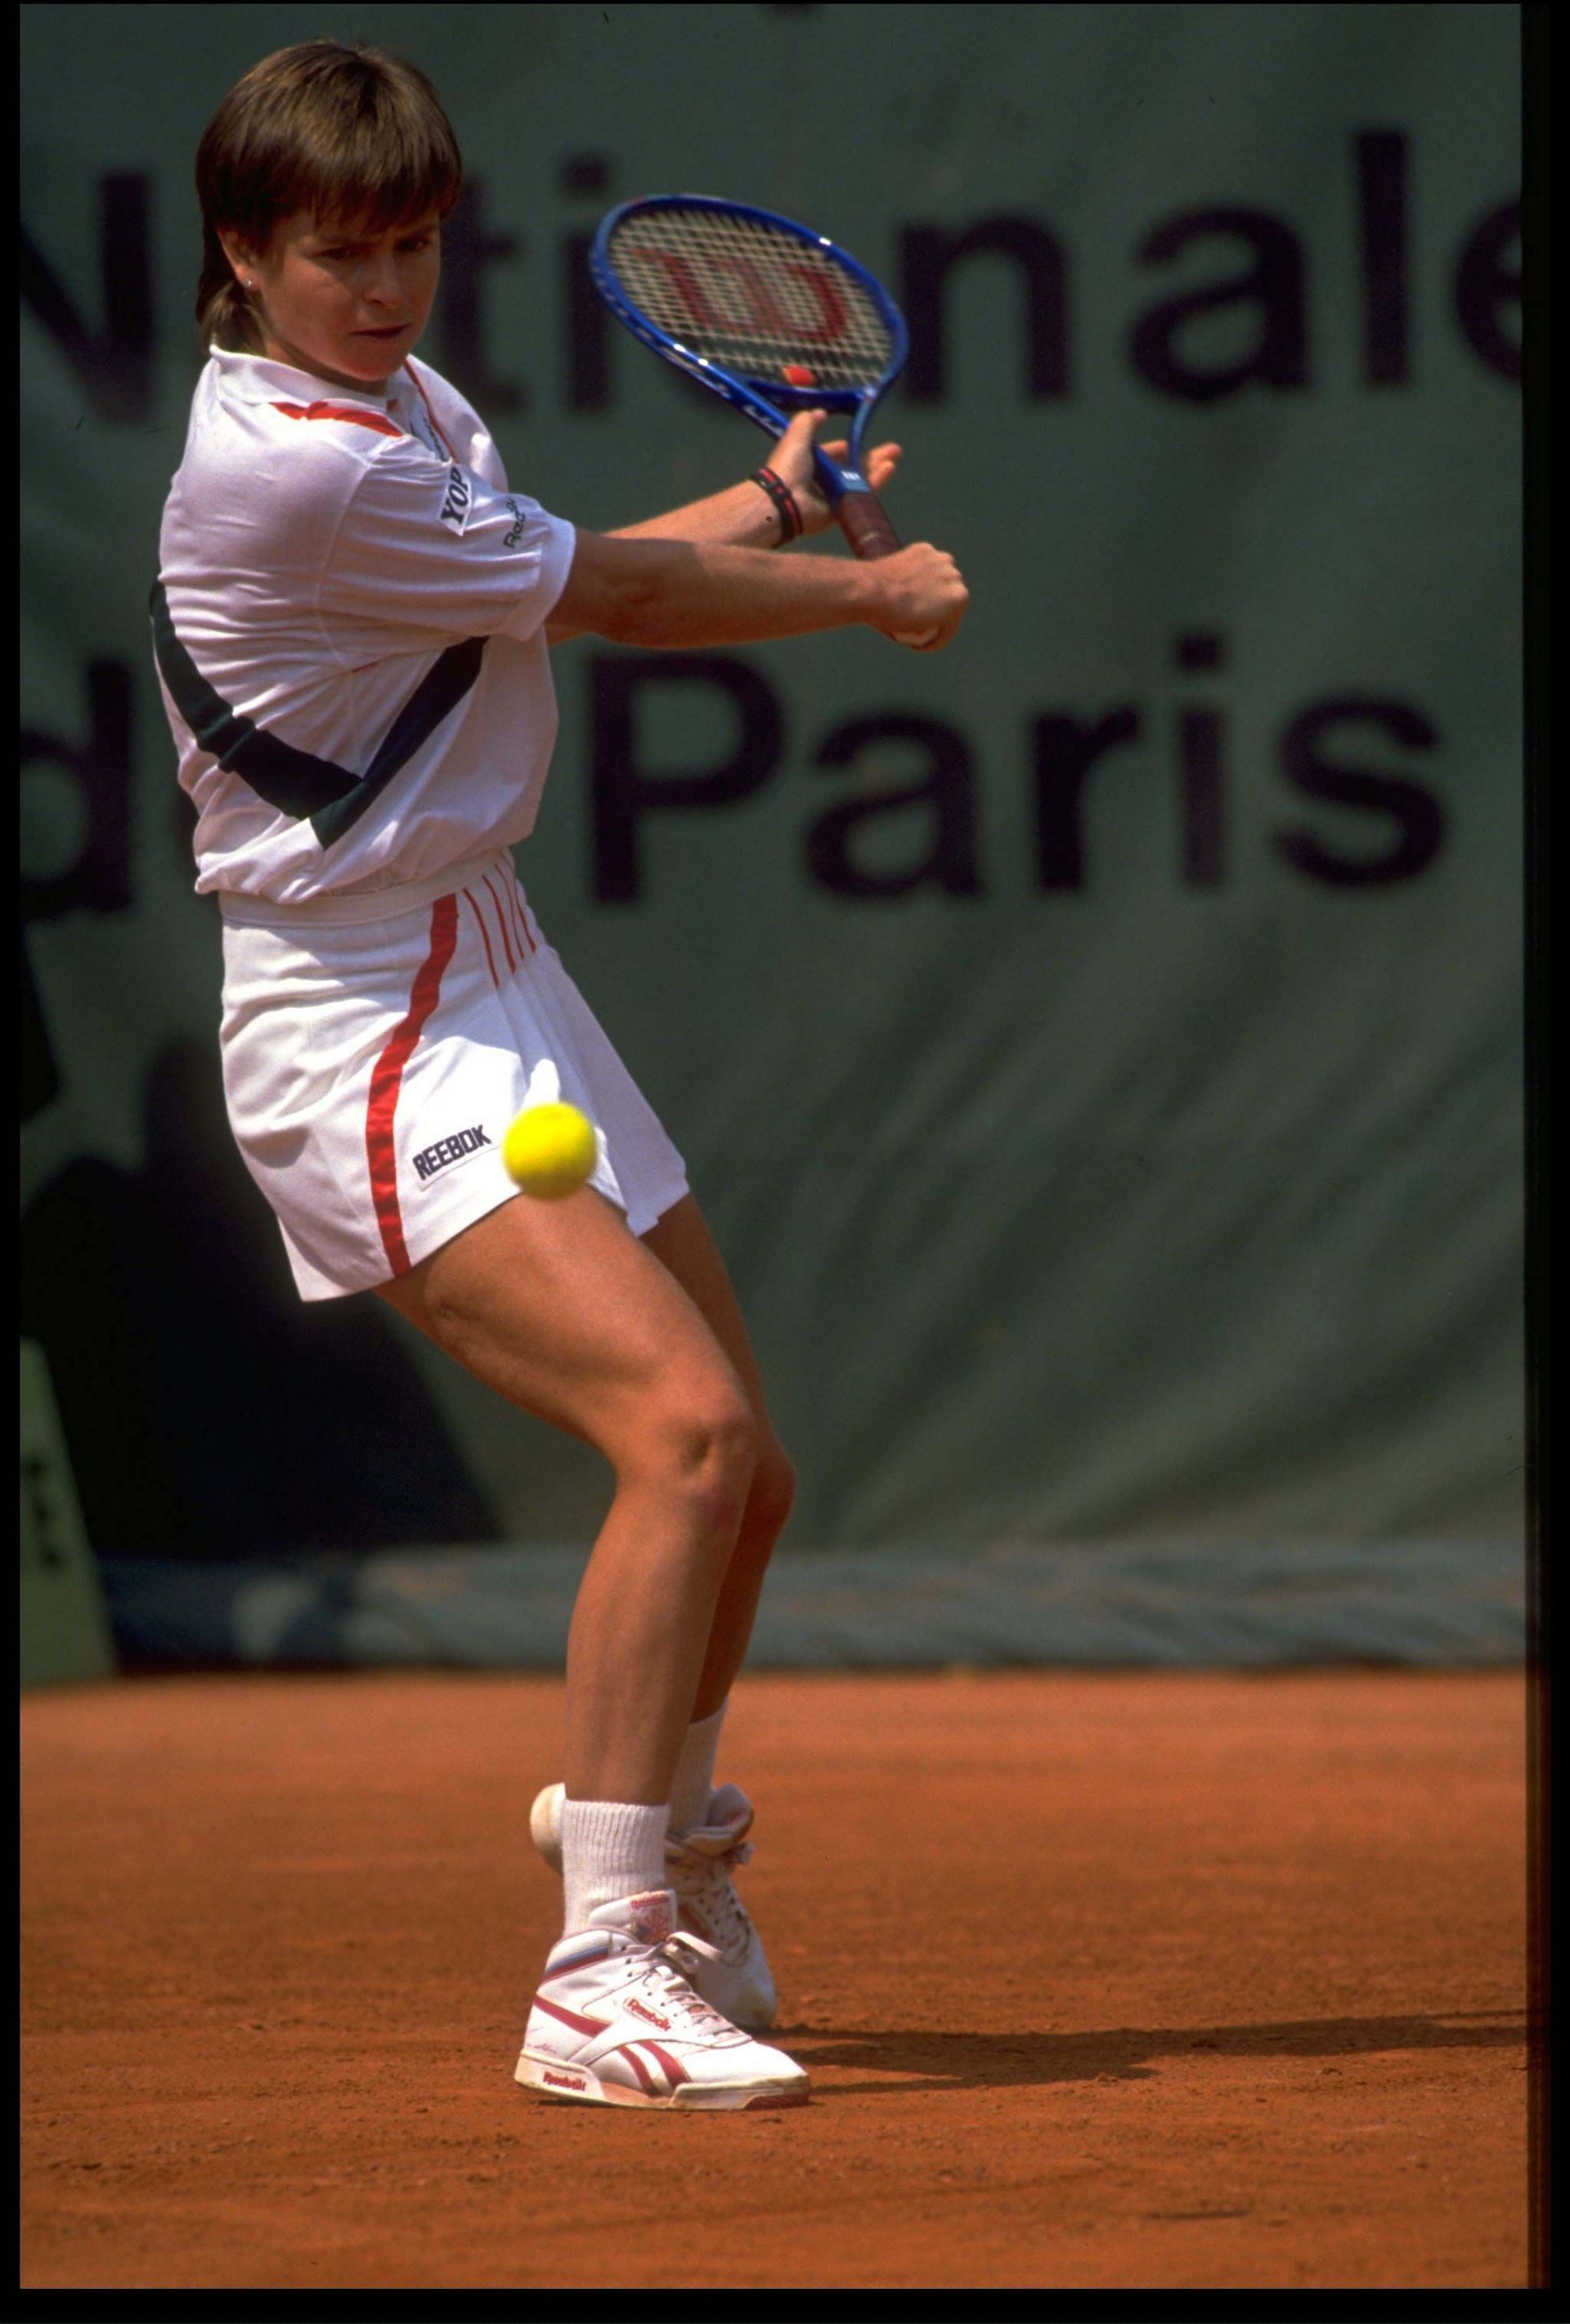 Hana Mandlikova playing on claycourt